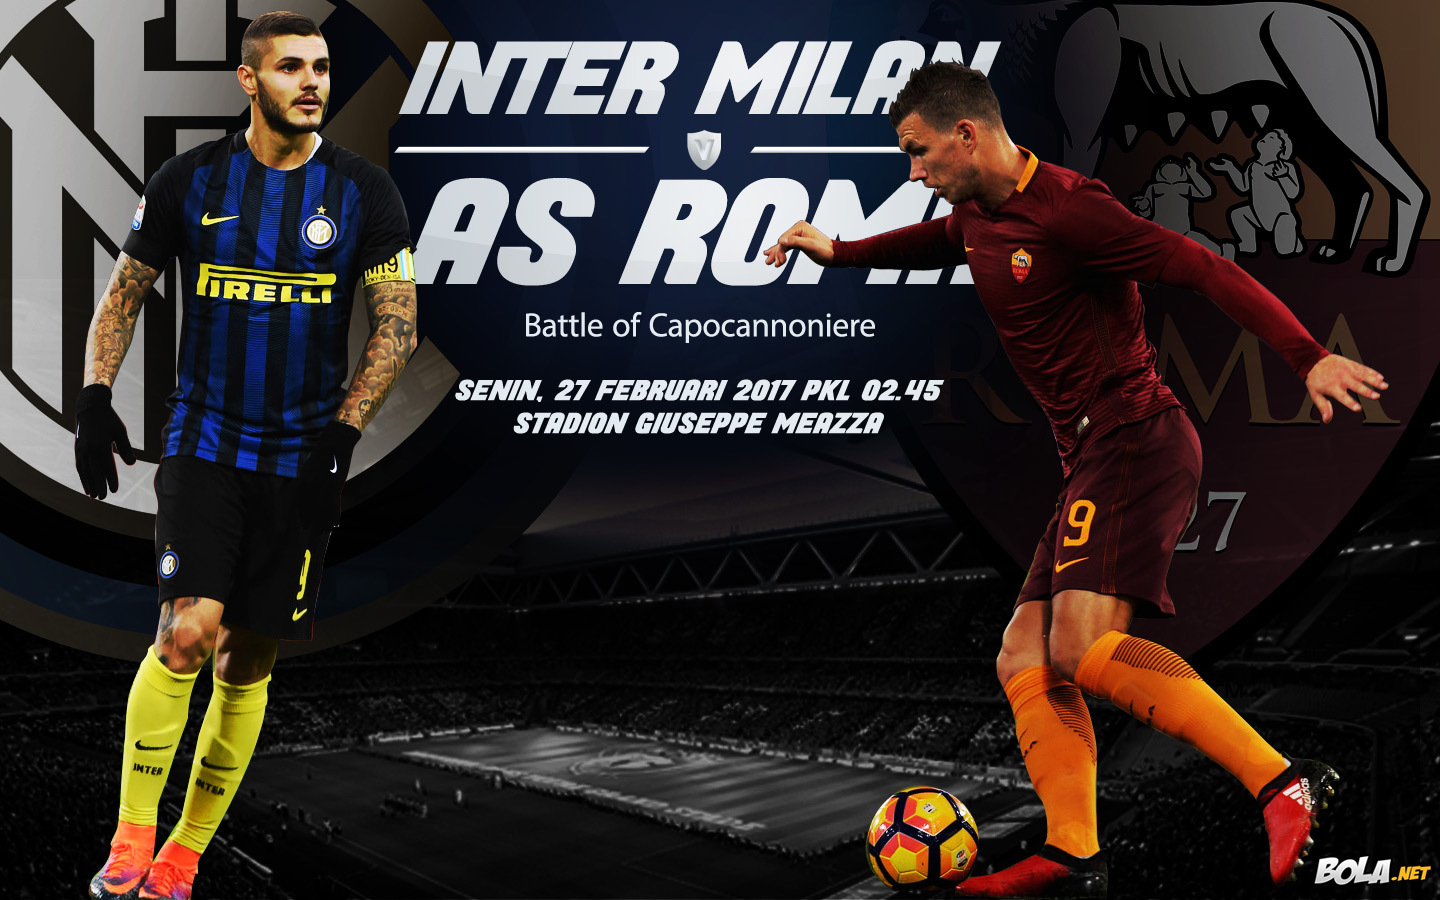 Deskripsi : Wallpaper Inter Milan Vs As Roma, size: 1440x900